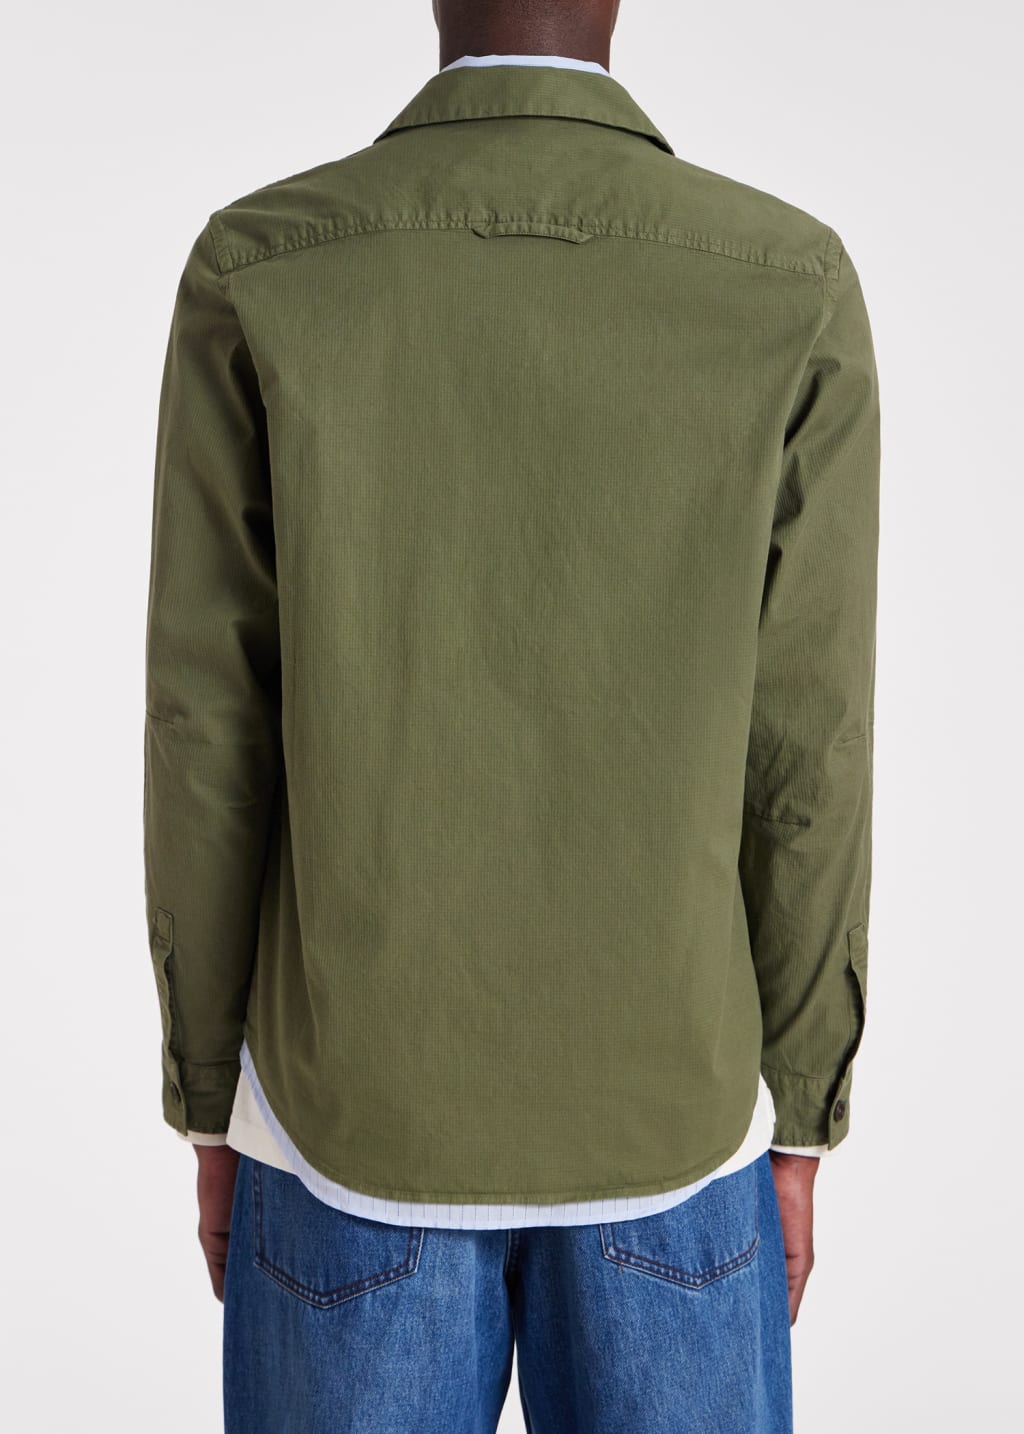 Model View - Khaki Textured Cotton-Blend Overshirt Paul Smith